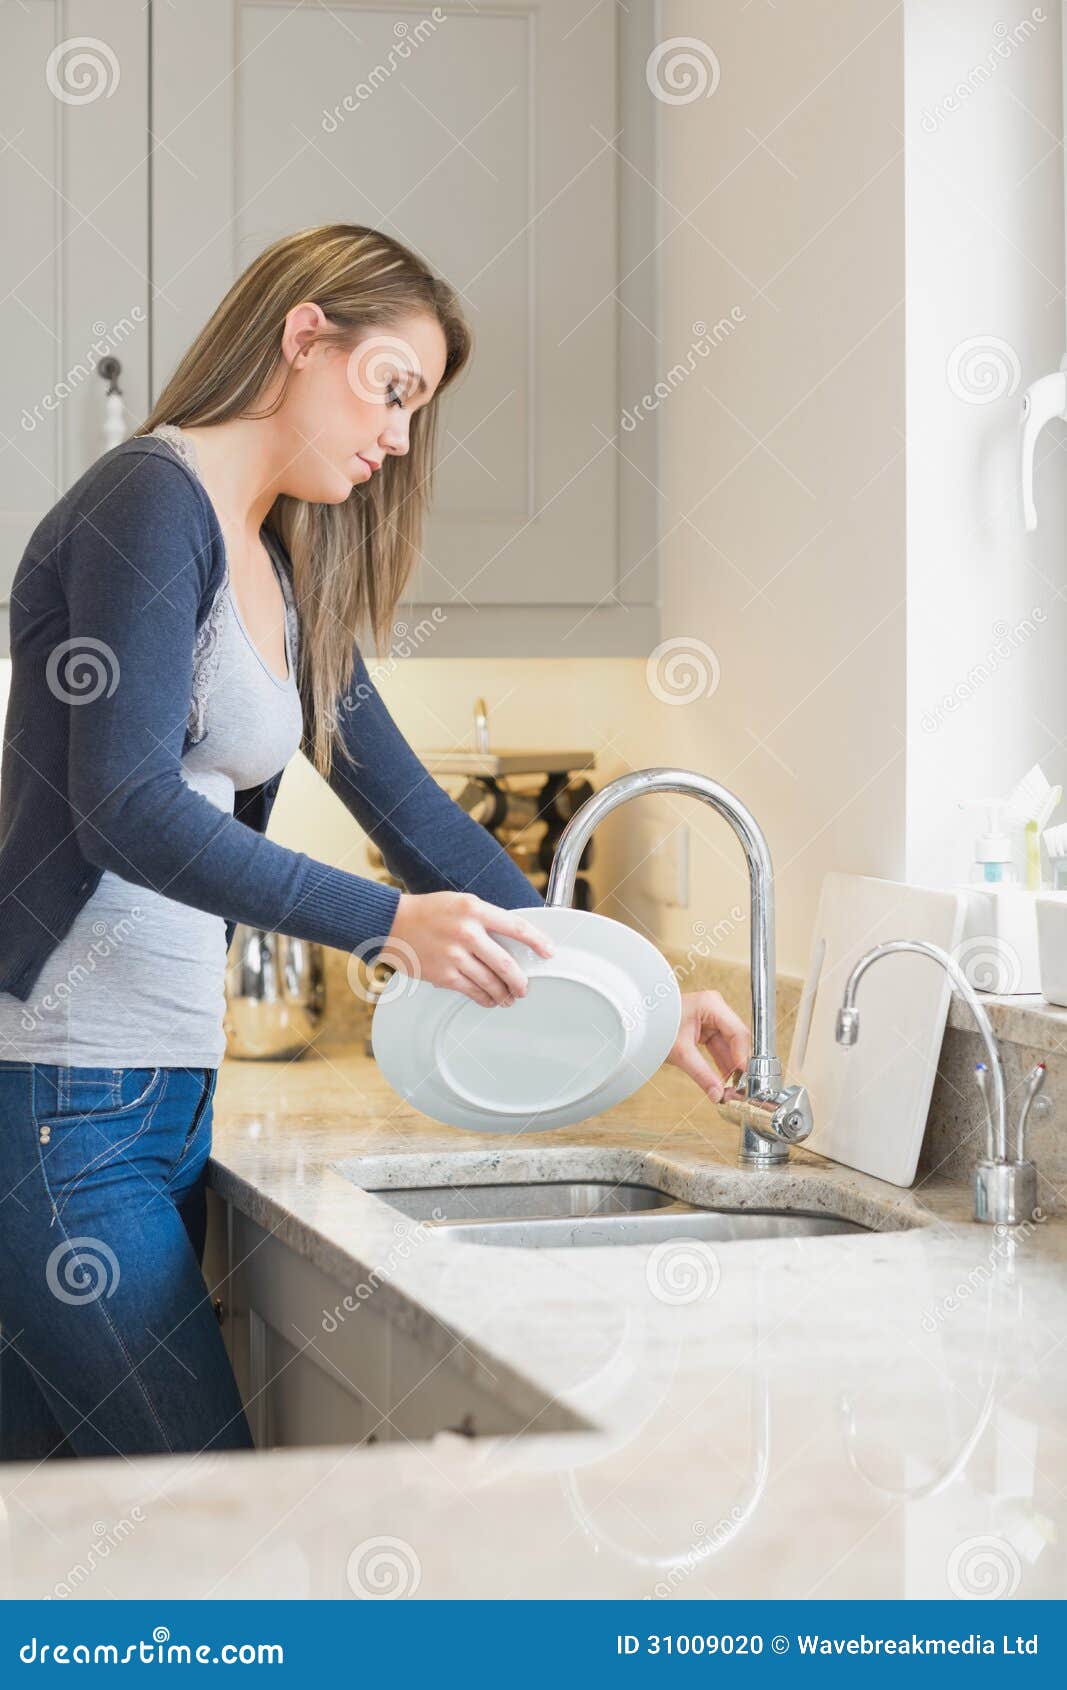 Do the washing предложения. Мыть посуду фото. Женщина моет посуду. Wash the dishes. Washing up или washing-up.